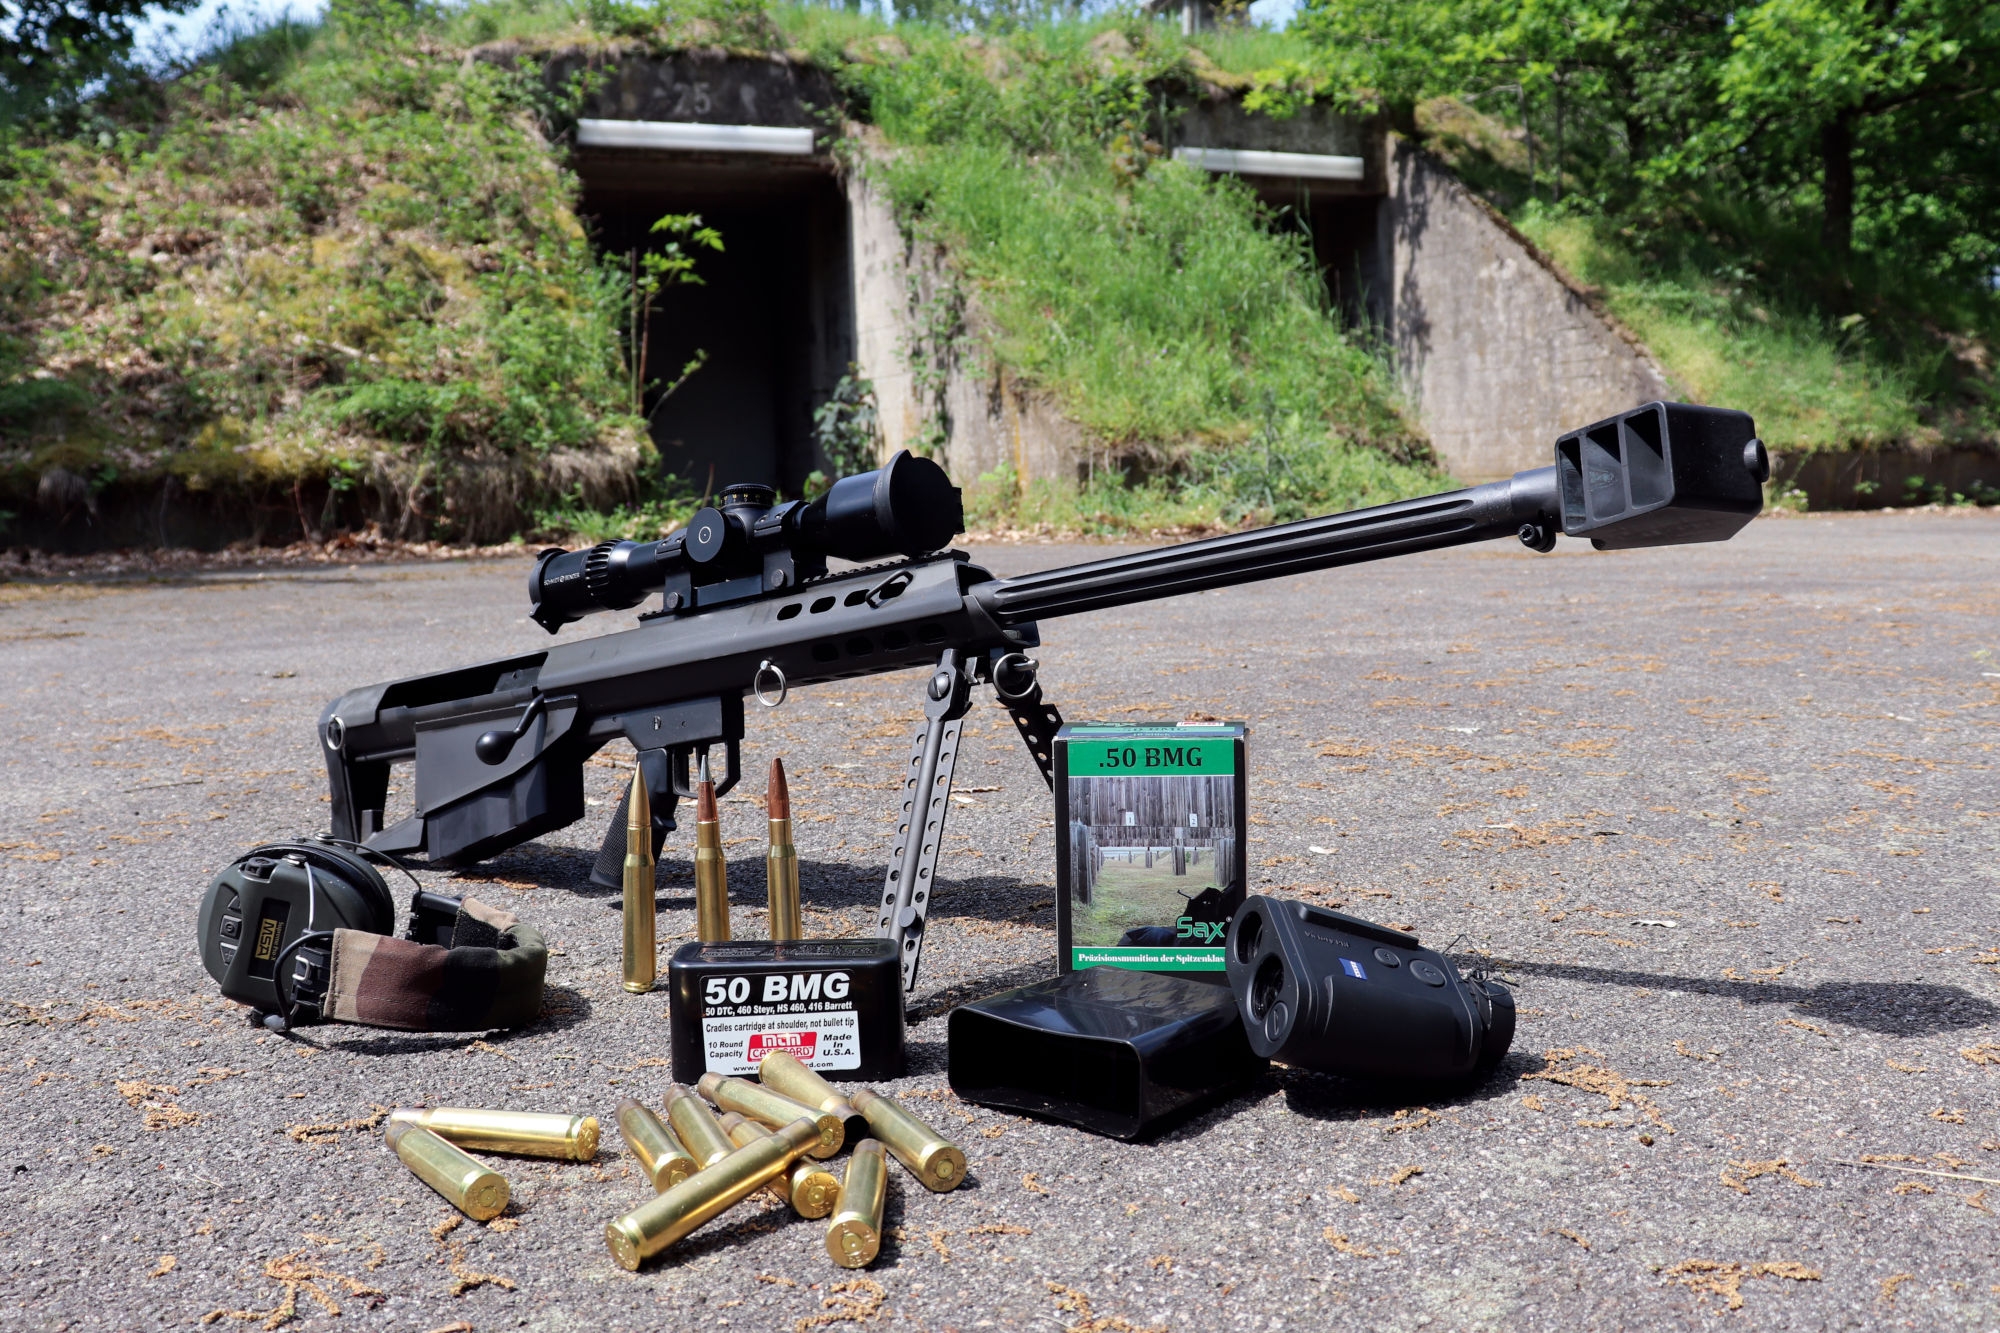 338 Lapua vs 50 BMG - Long Range Cartridge Comparison